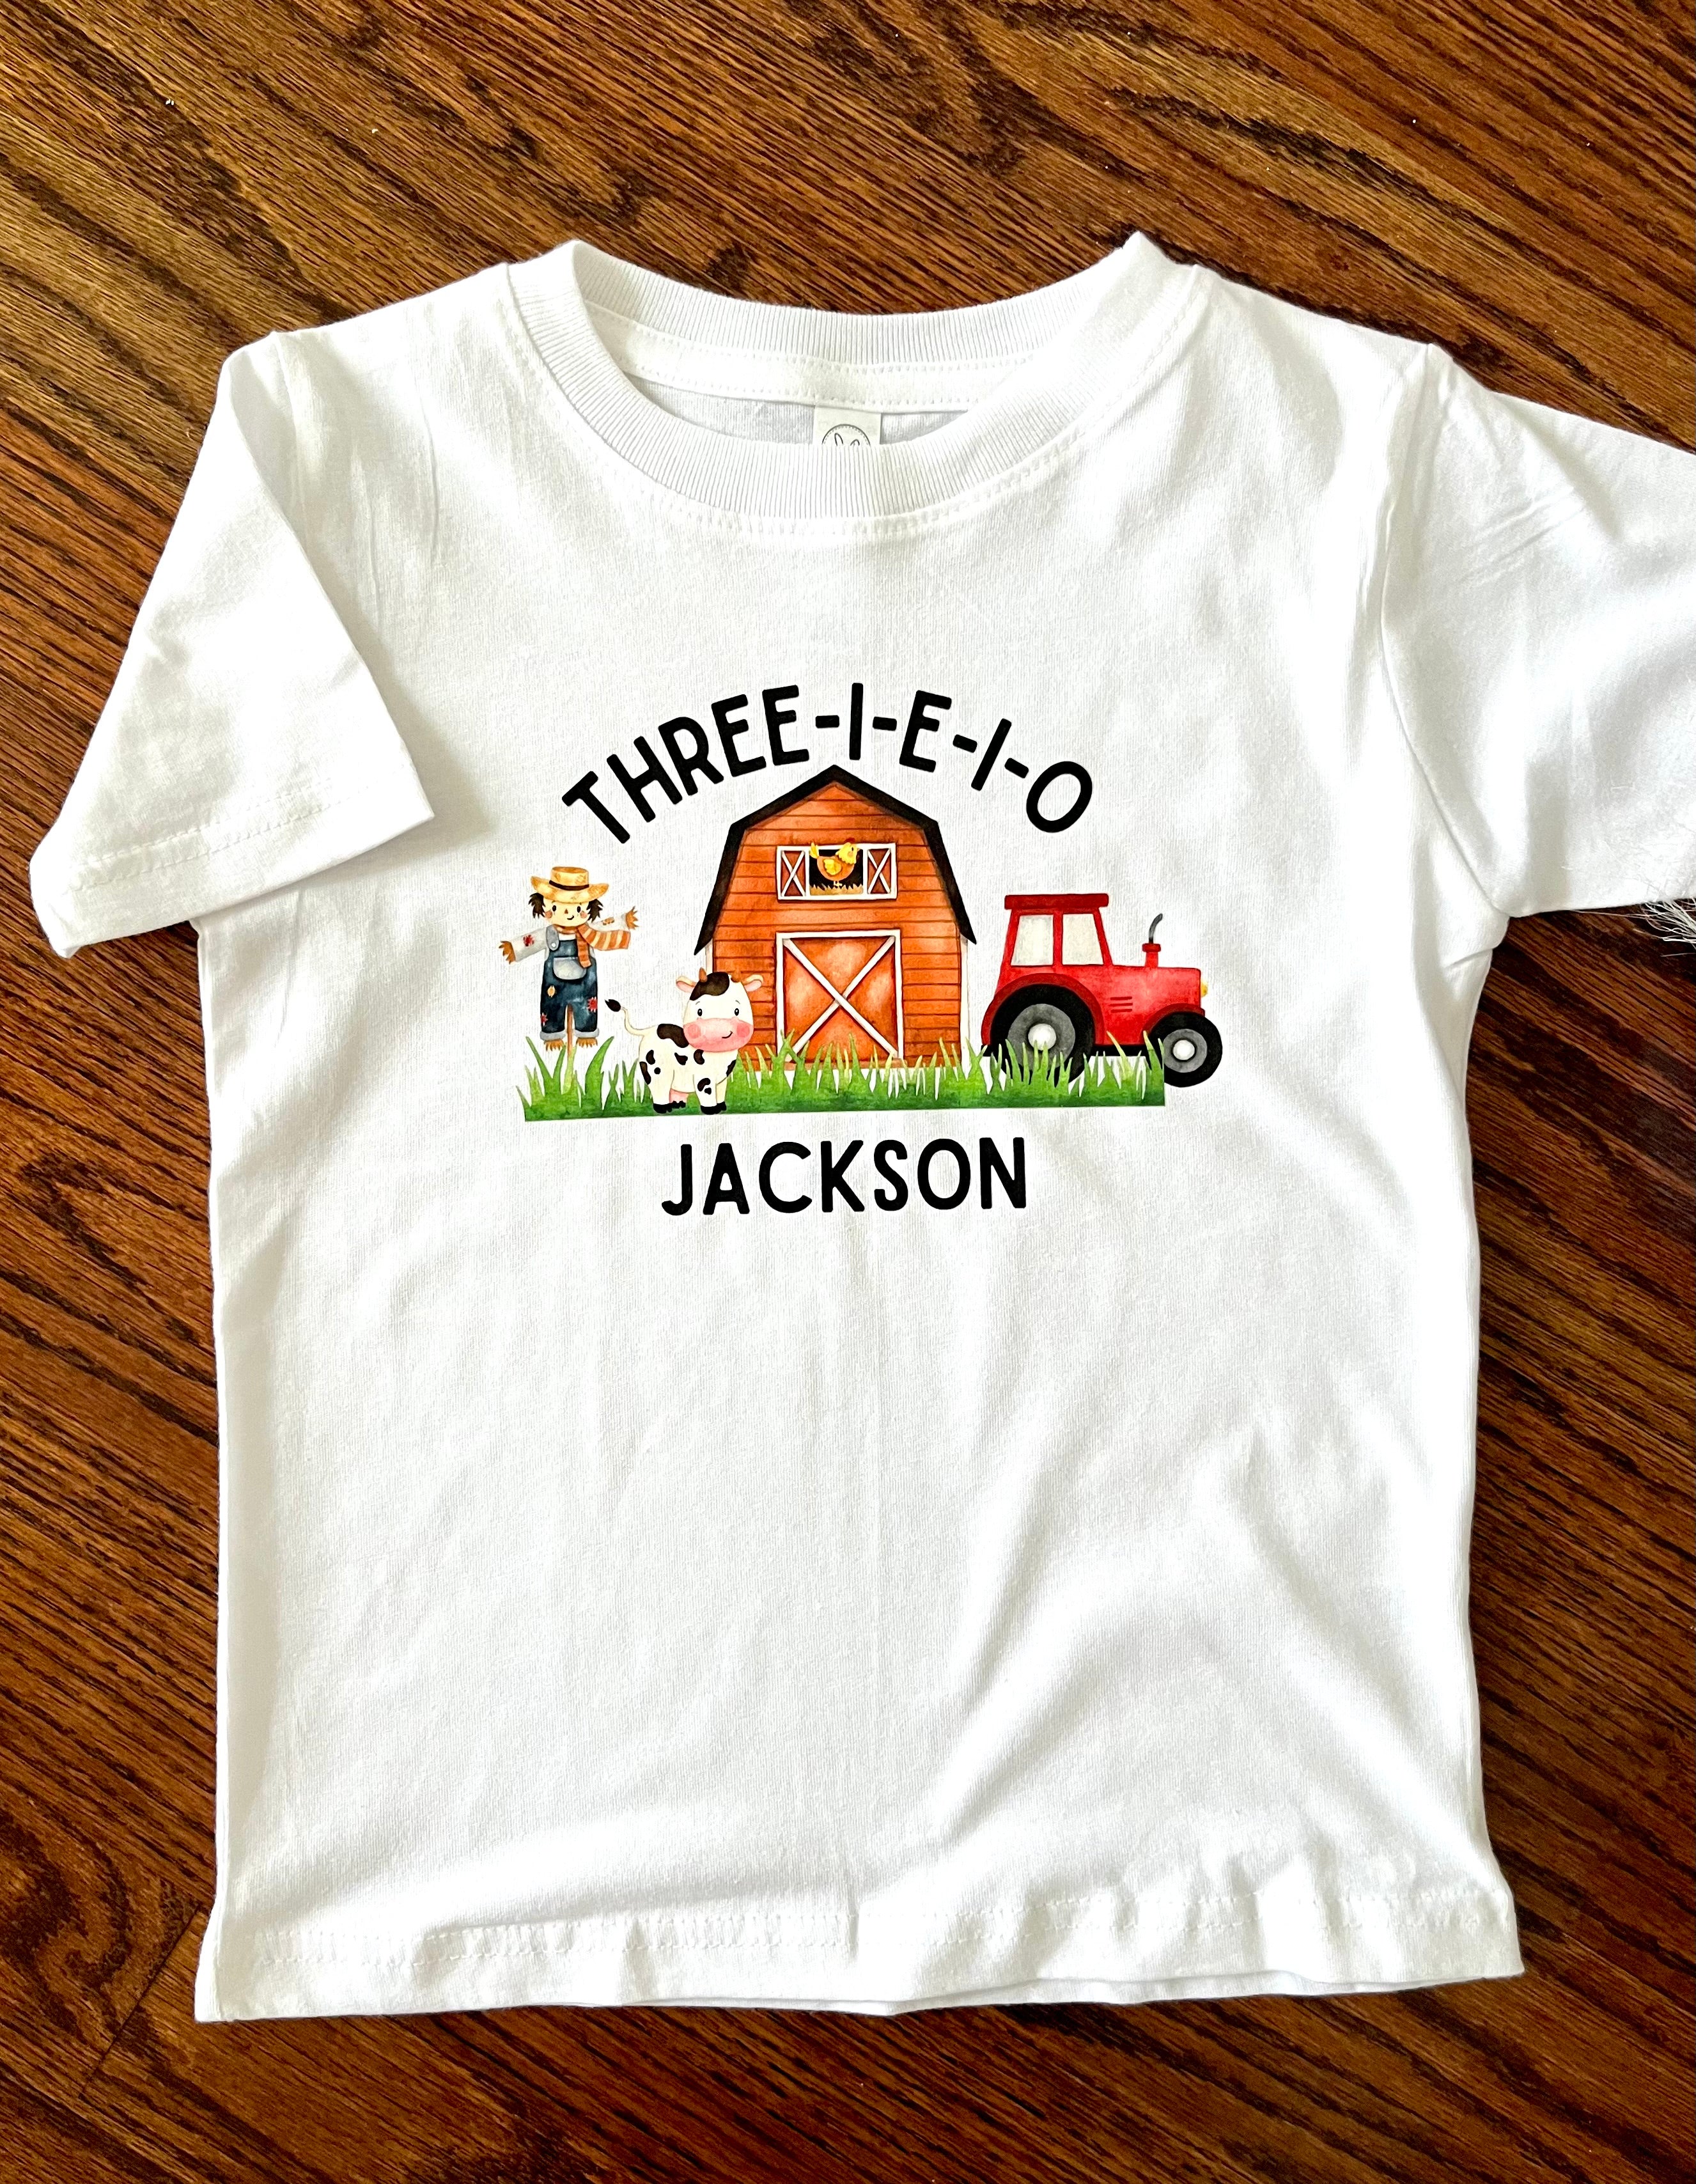 *CUSTOM ORDER* Toddler/Baby Shirt